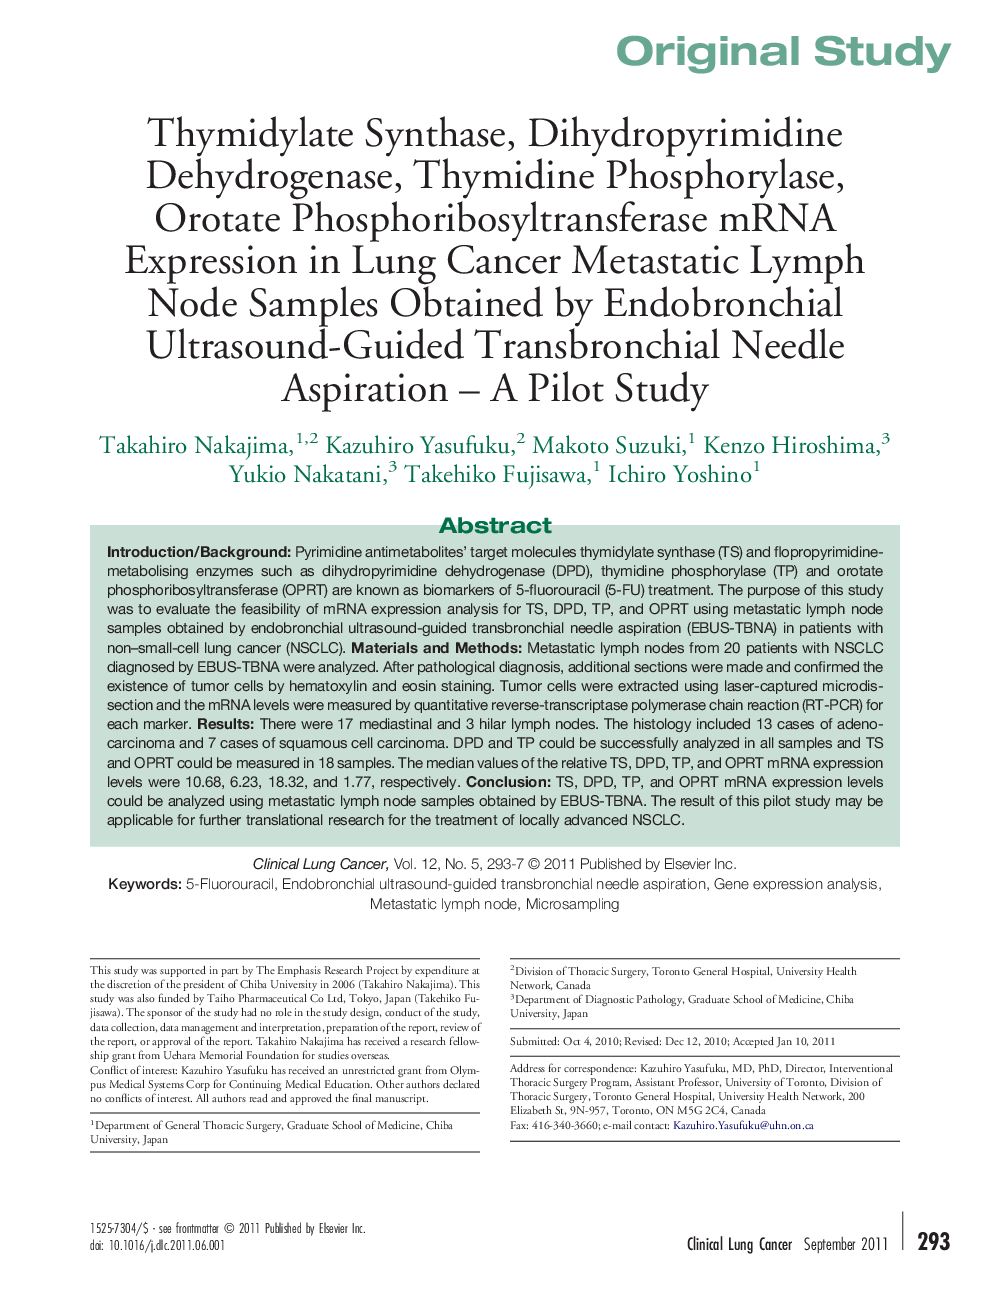 Thymidylate Synthase, Dihydropyrimidine Dehydrogenase, Thymidine Phosphorylase, Orotate Phosphoribosyltransferase mRNA Expression in Lung Cancer Metastatic Lymph Node Samples Obtained by Endobronchial Ultrasound-Guided Transbronchial Needle Aspiration – A